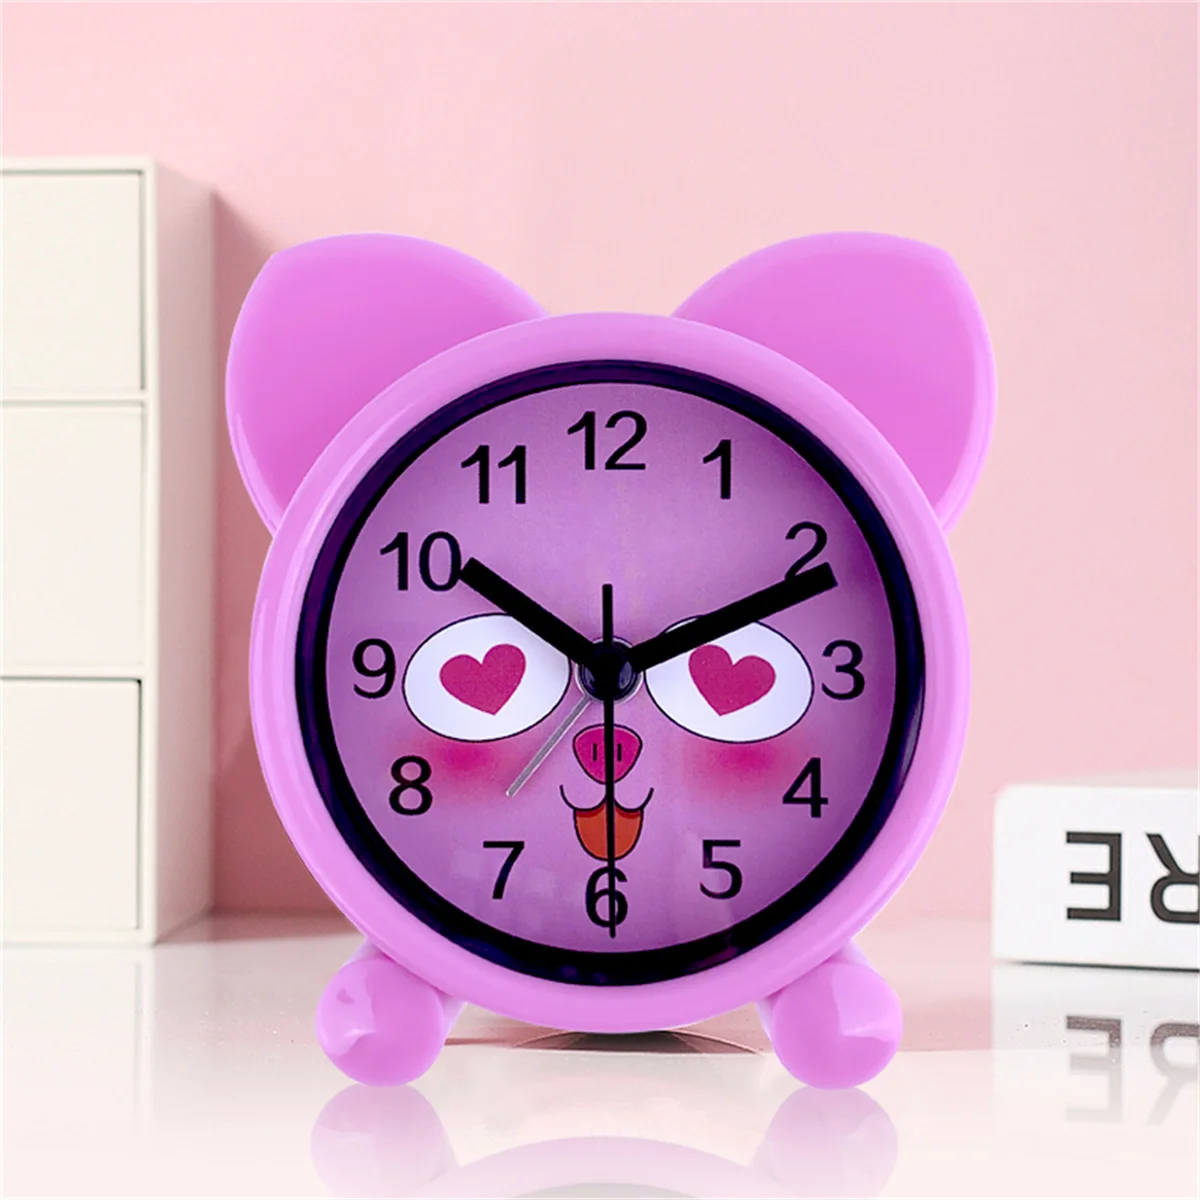 daniel charpentier recommends Clit O Clock Alarm